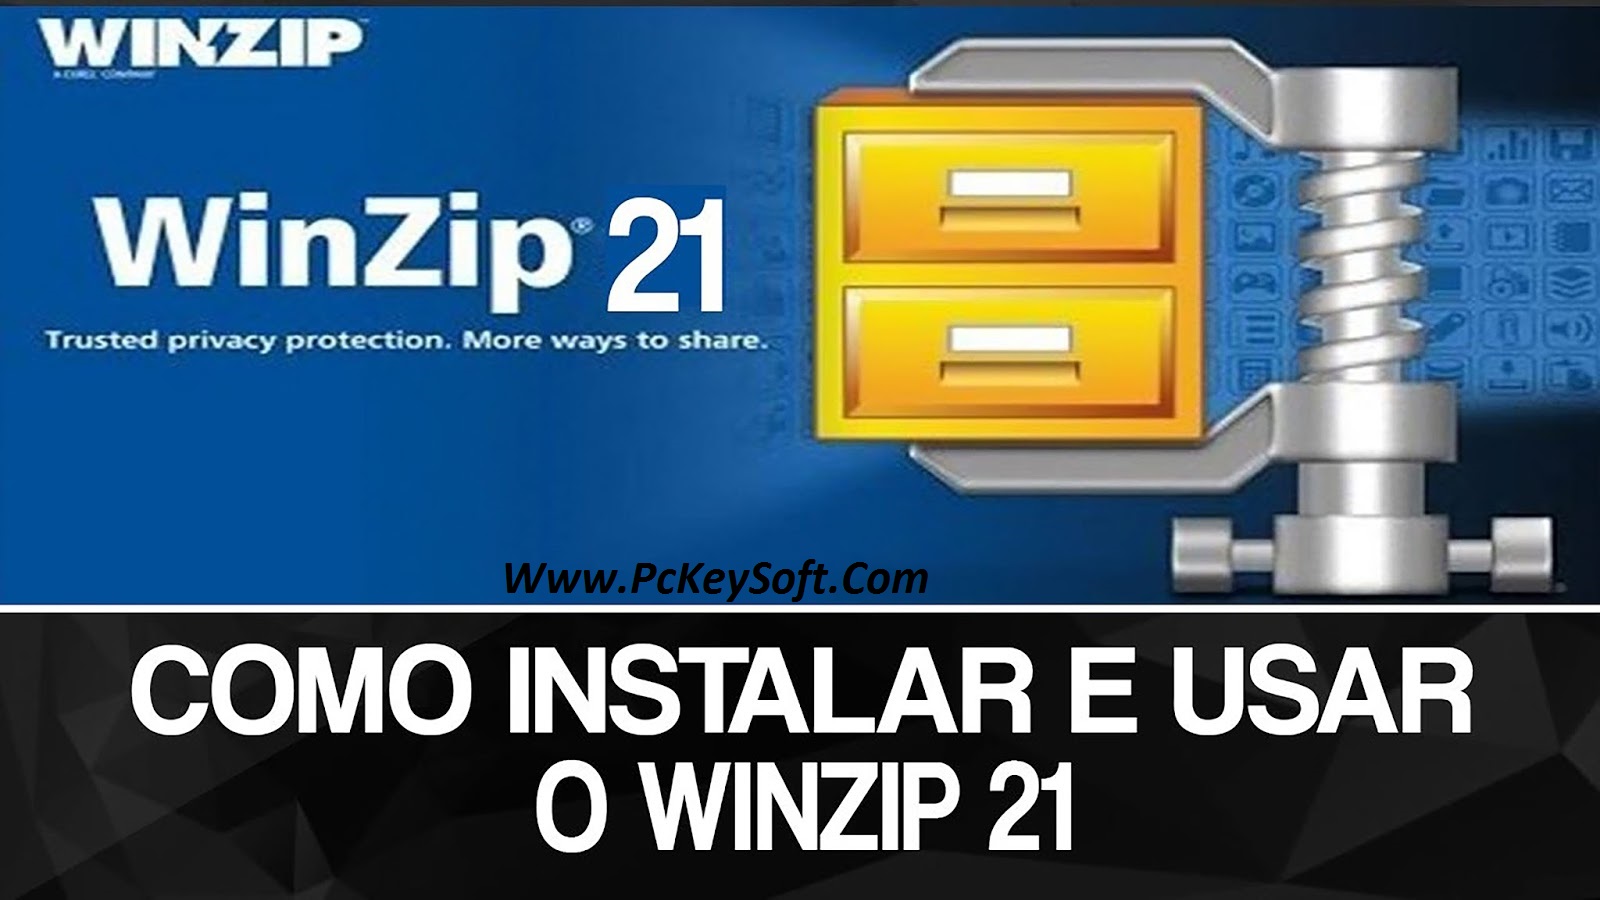 Winzip key generator free download windows 10